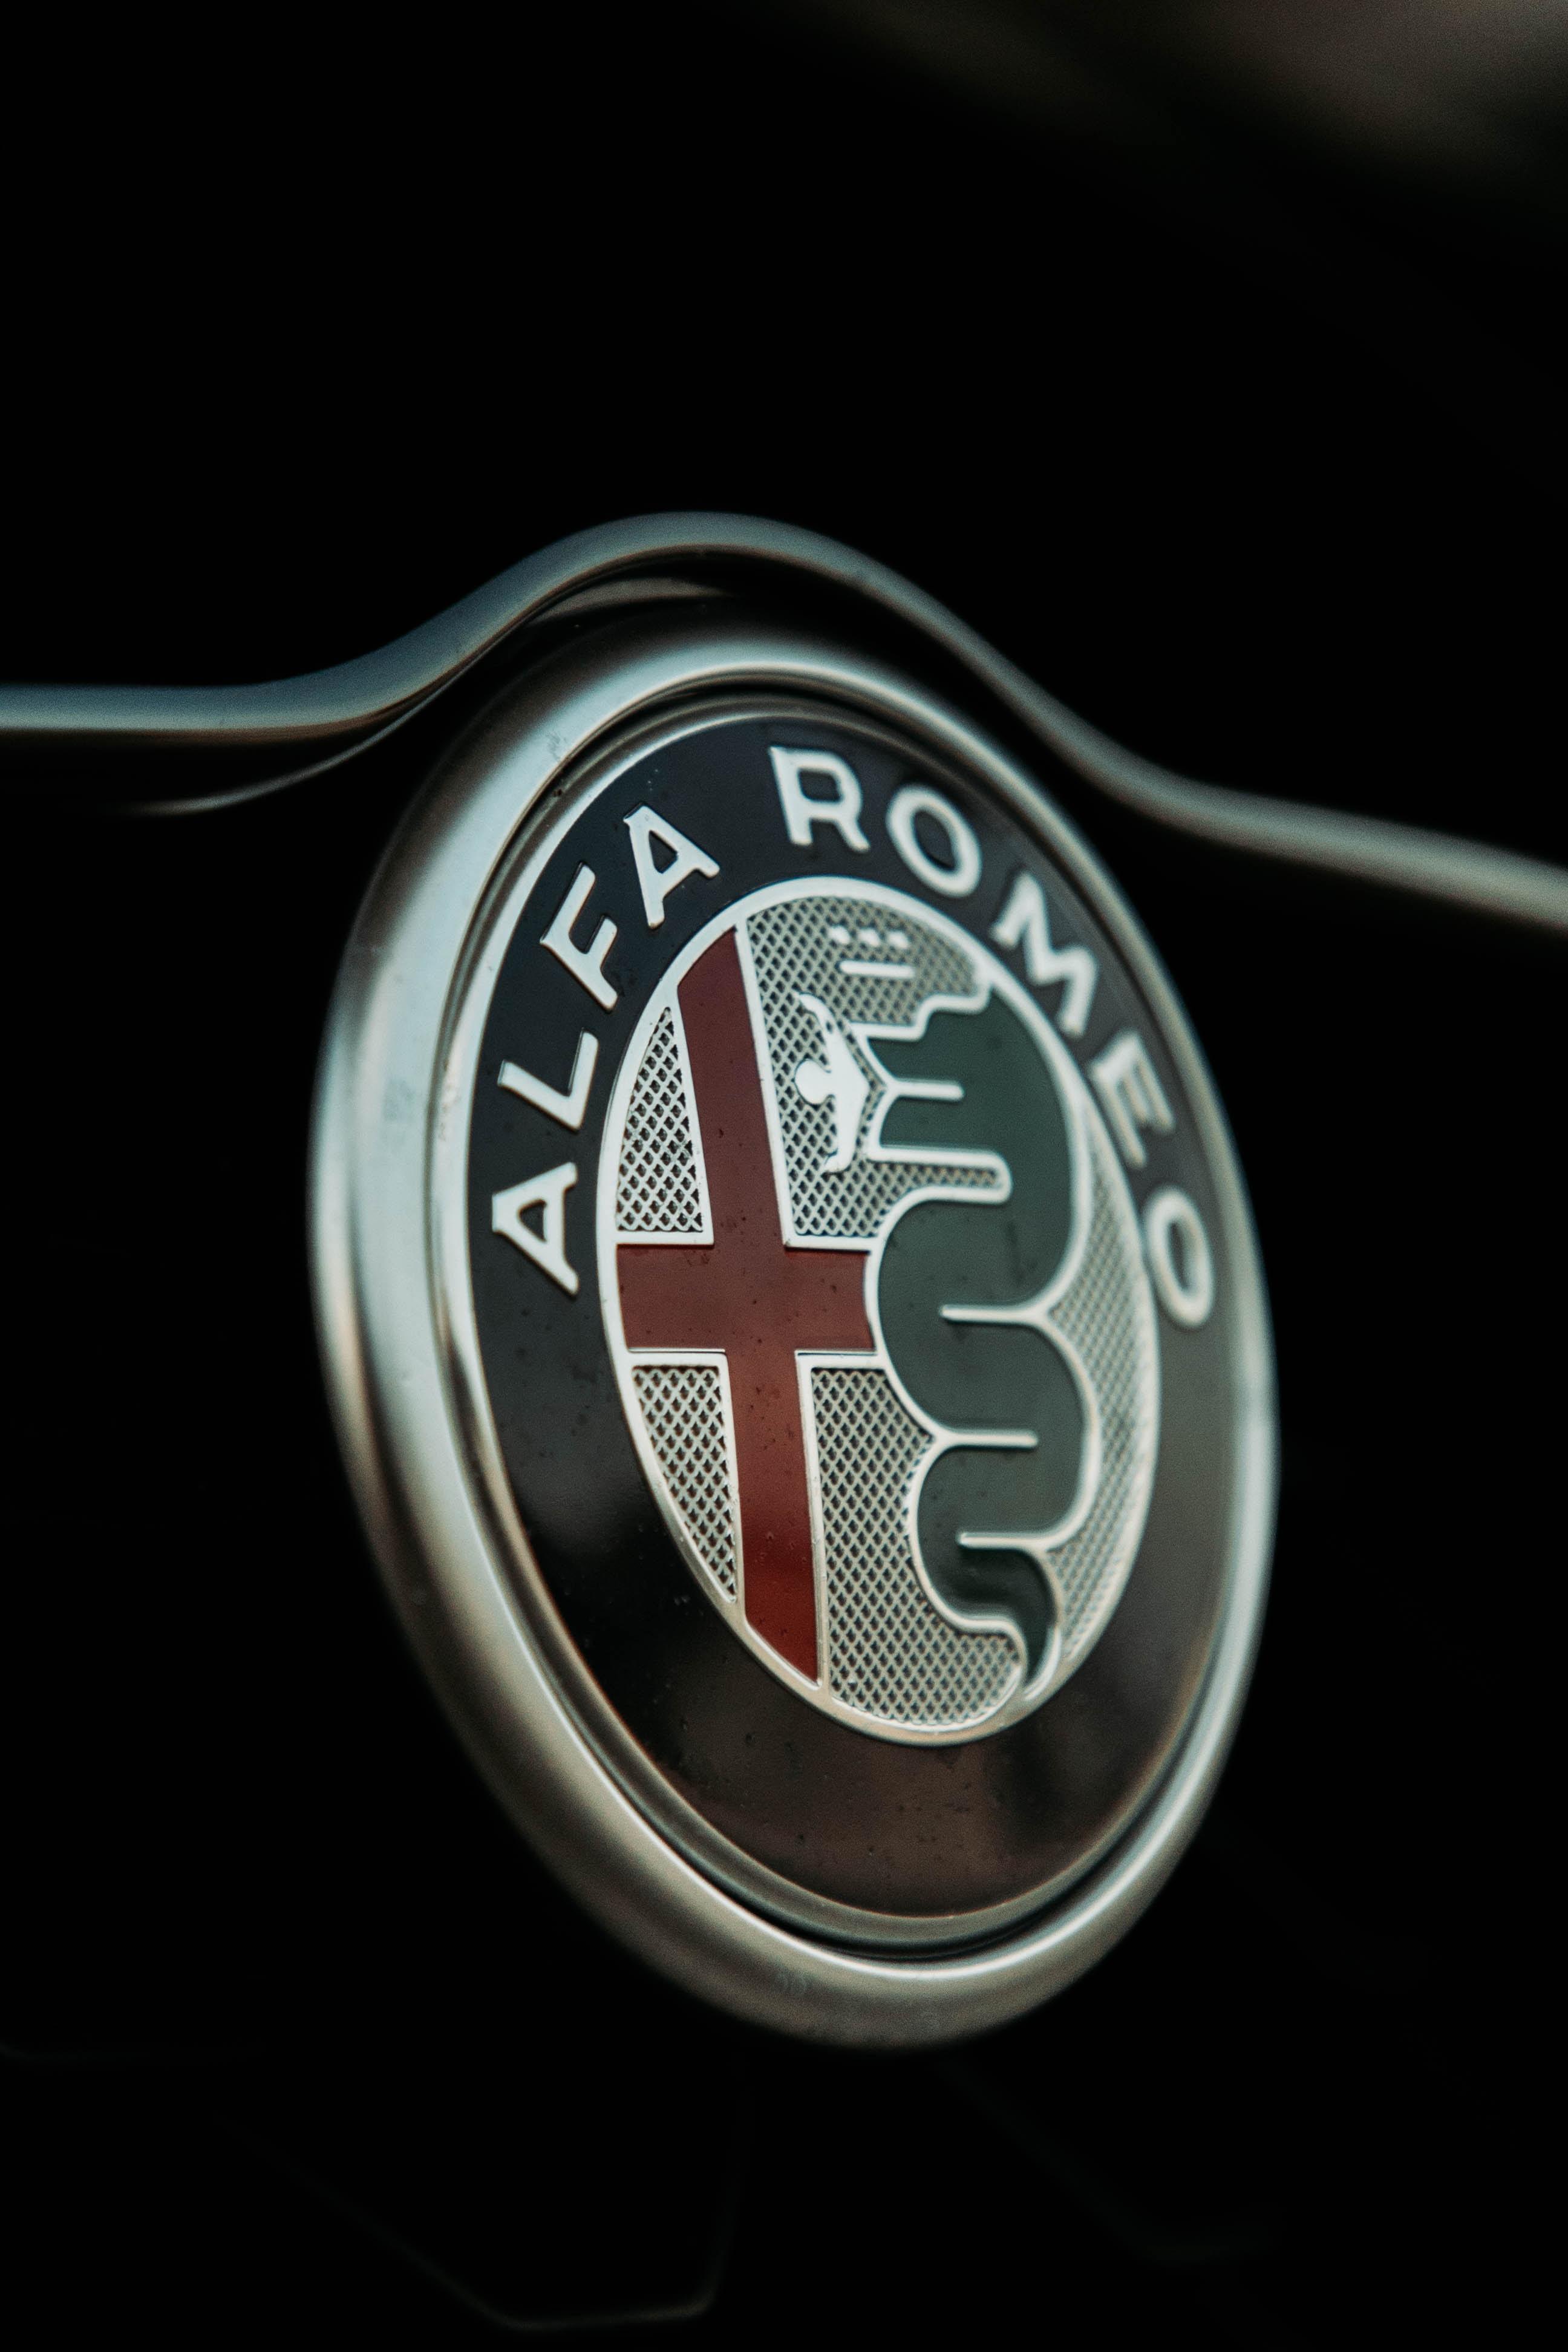 The Alfa Romeo logo on a black background.